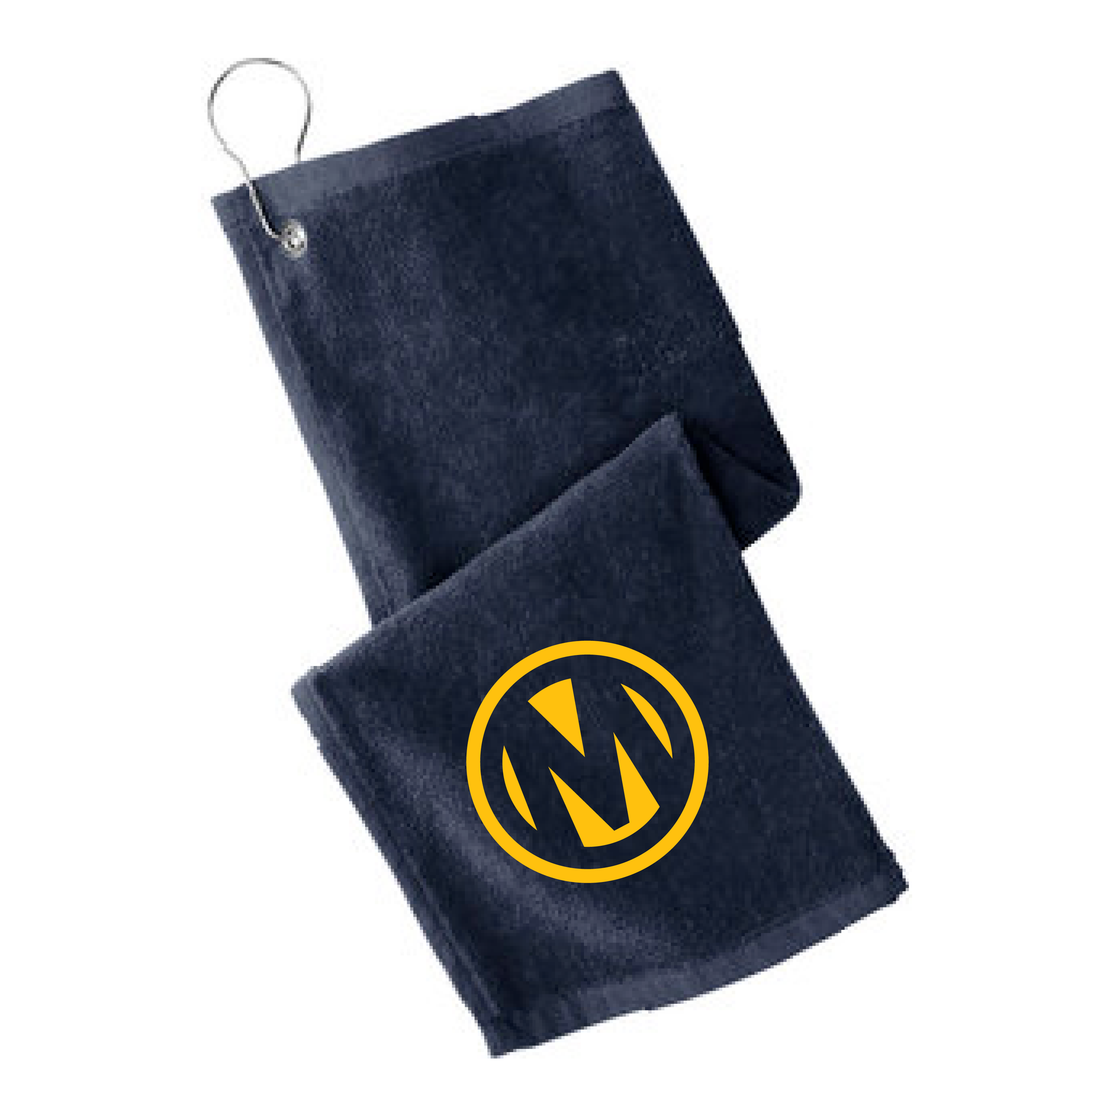 Manheim Phoenix Golf Shoe Bag & Towel